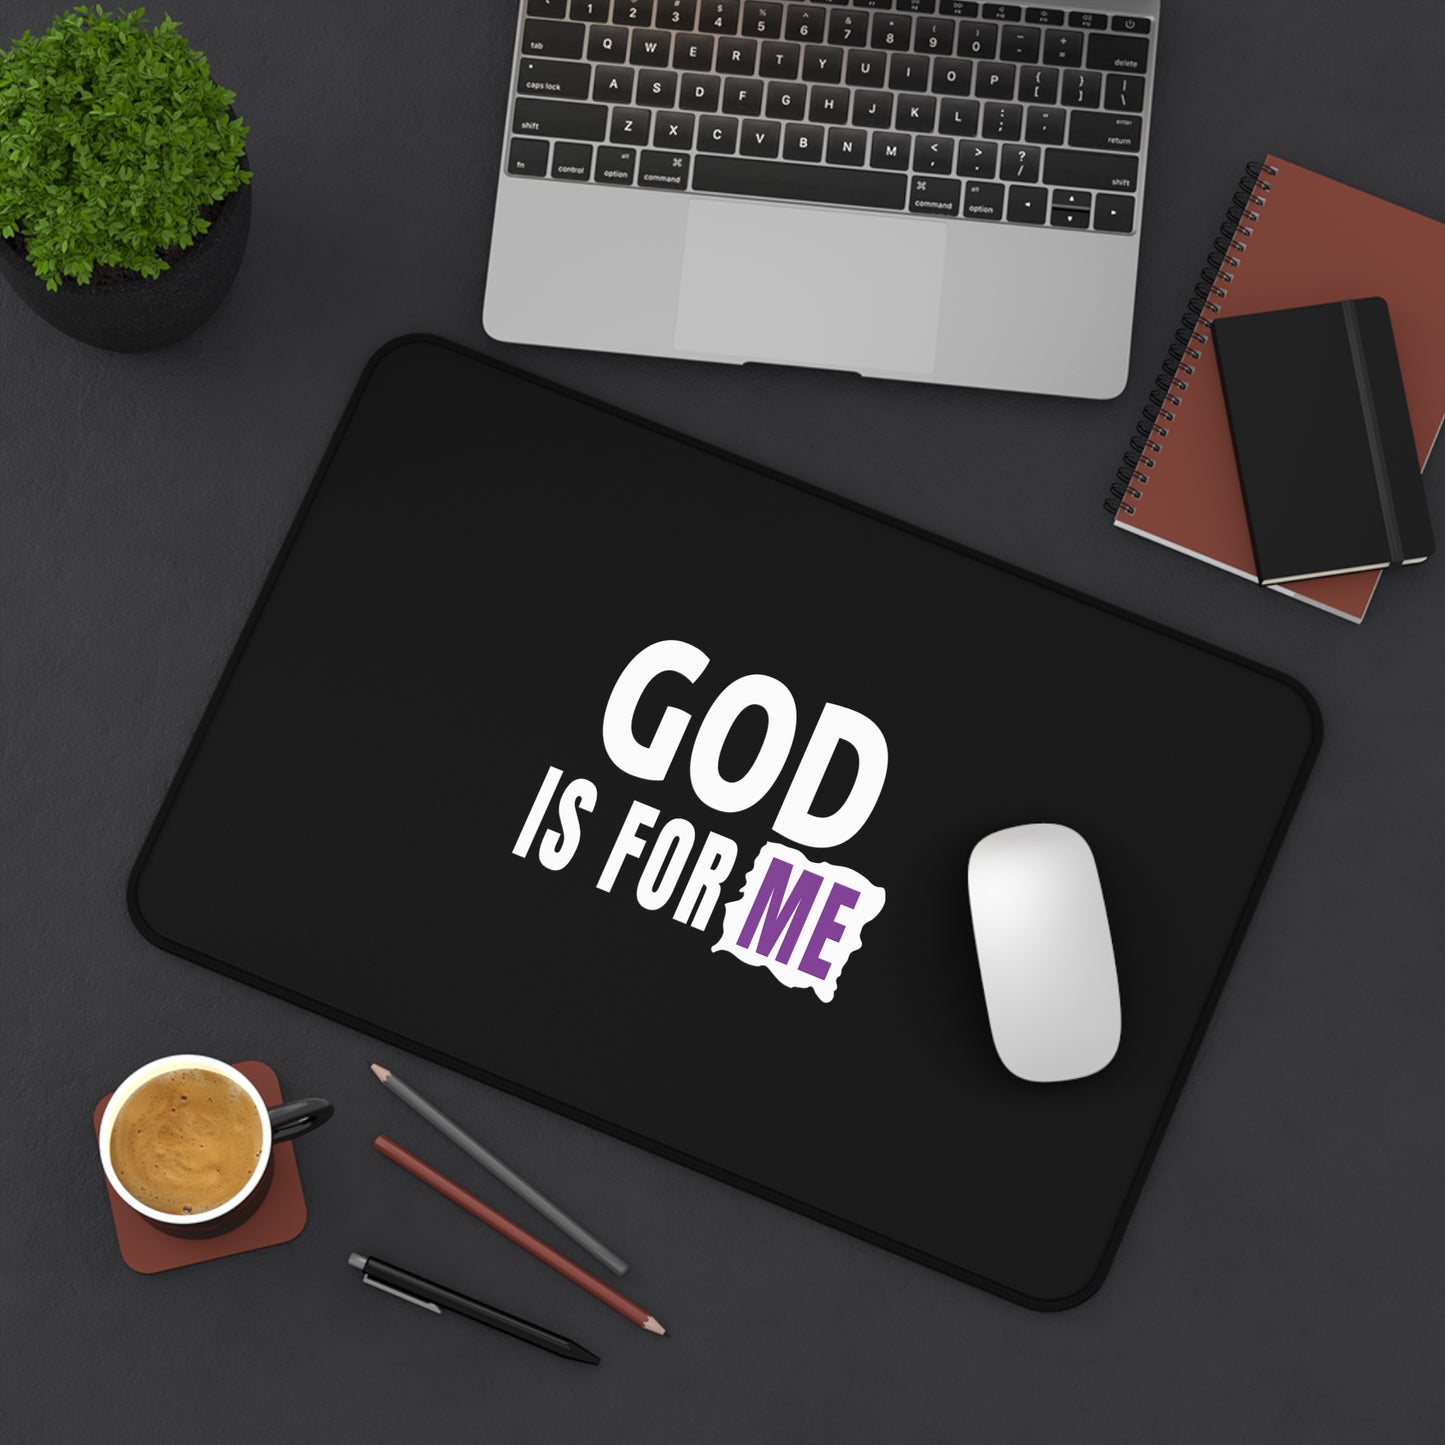 God Is For Me Christian Computer Keyboard Mouse Desk Mat